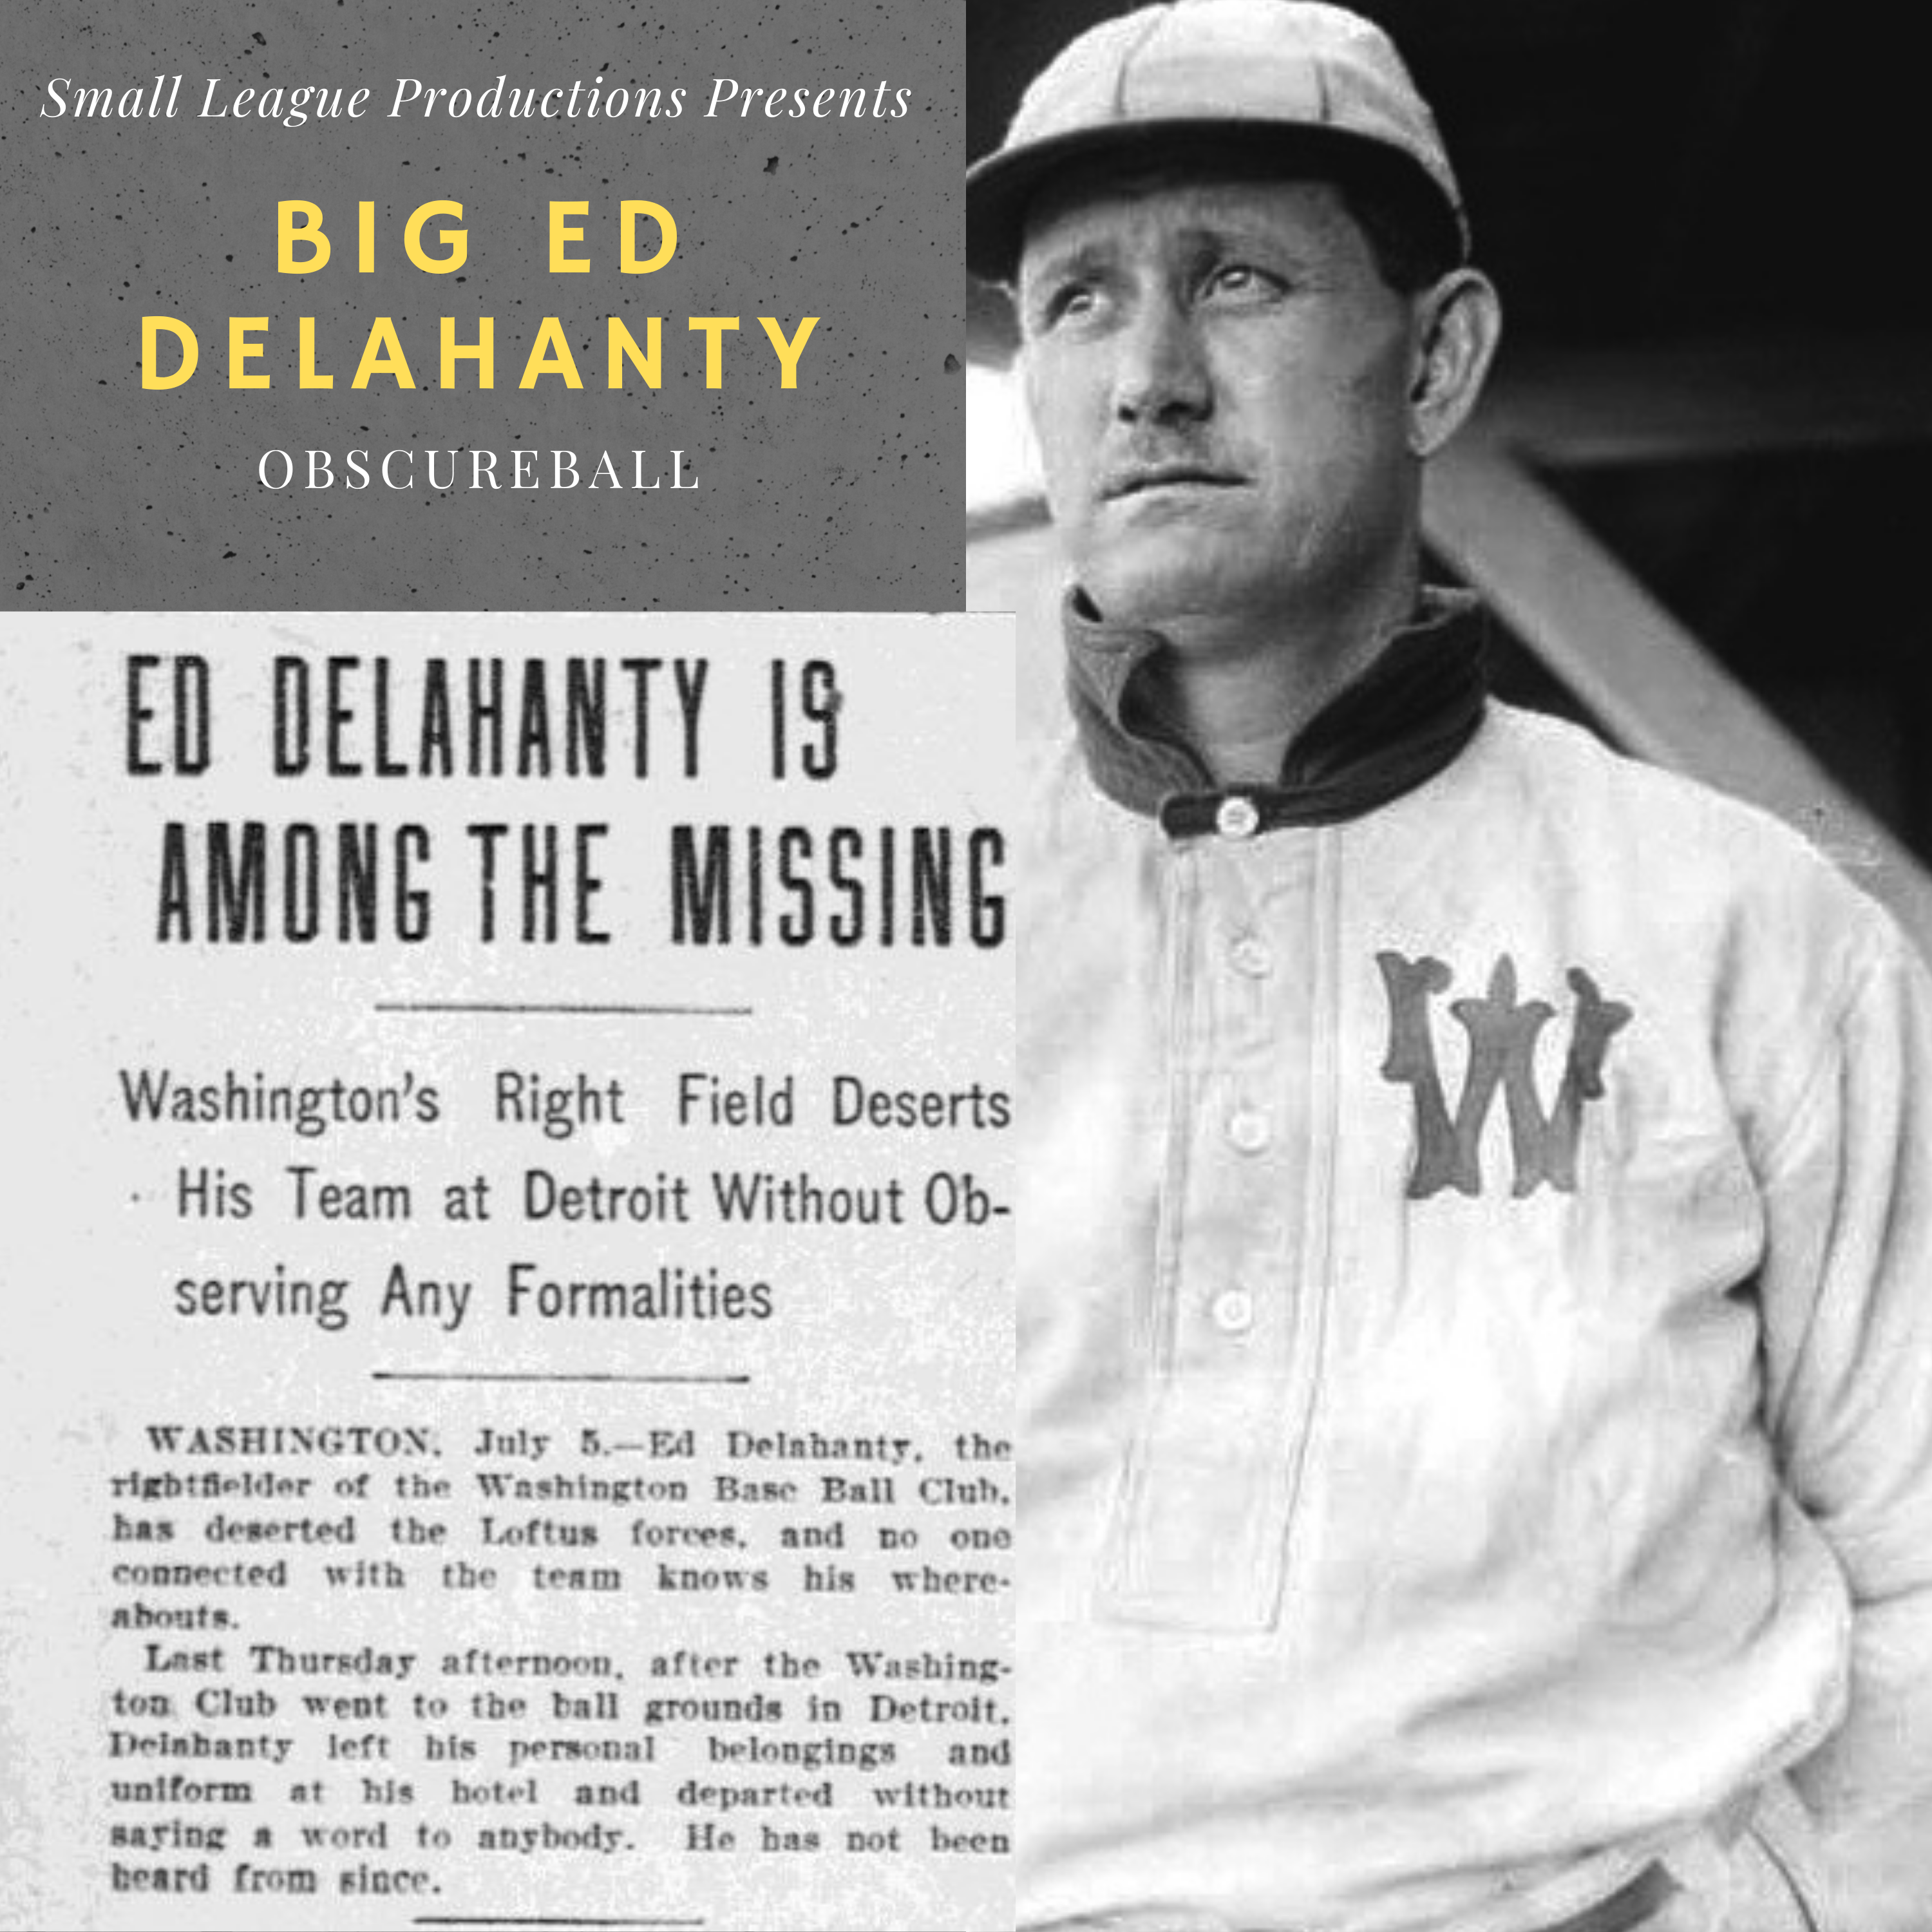 Big Ed Delahanty